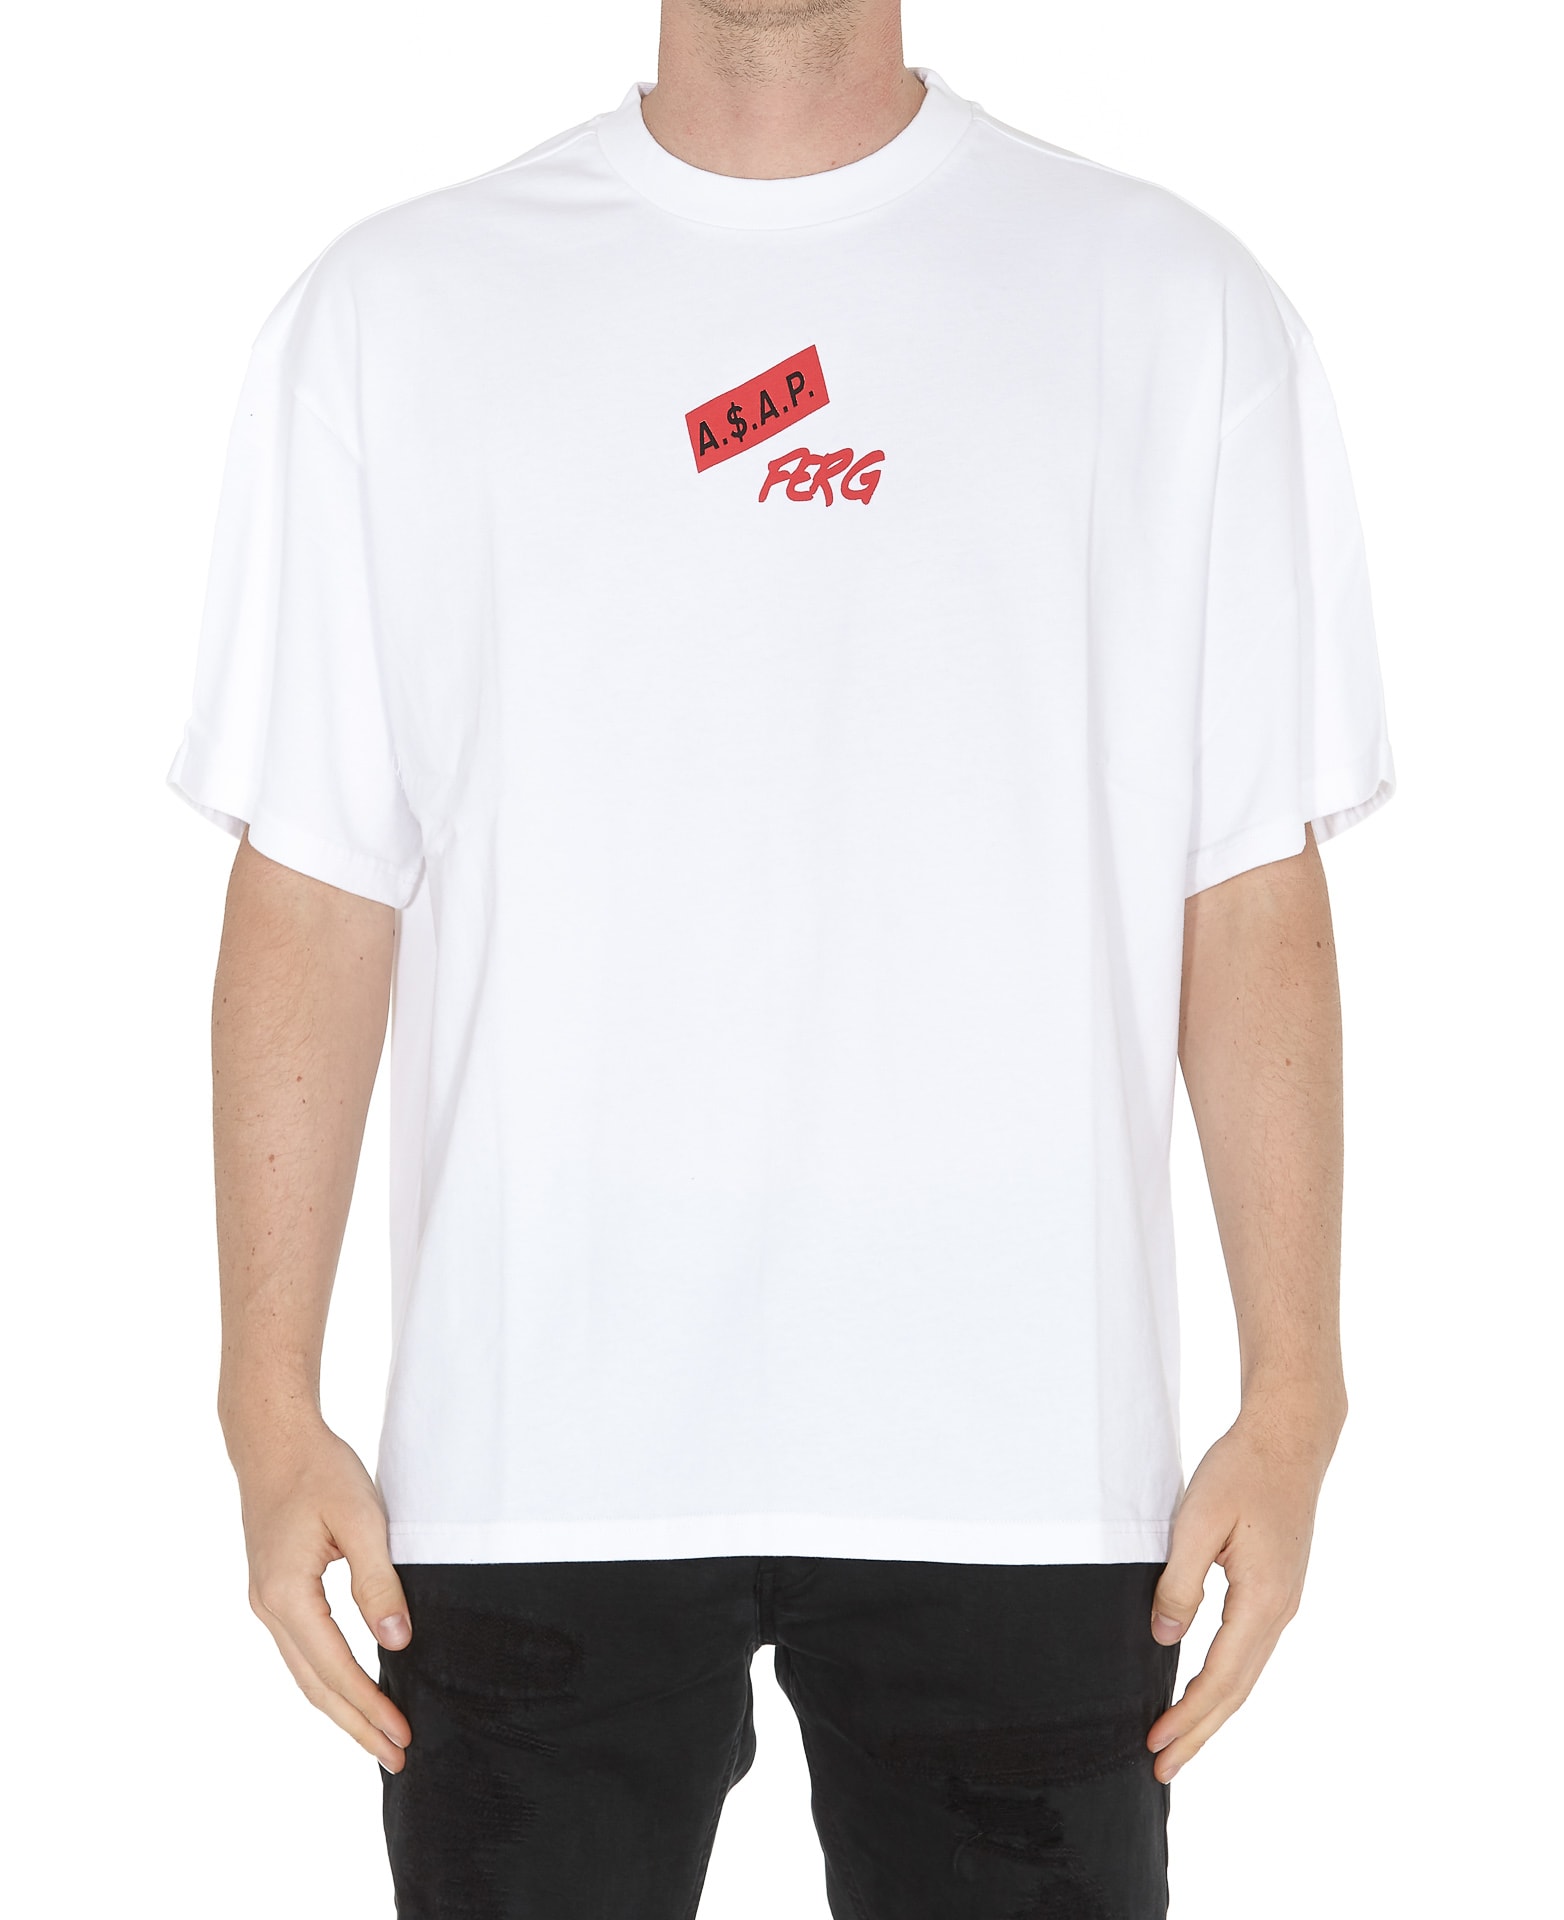 Aap Ferg By Platformx A$ap Ferg By Platformx Logo T- Shirt In White